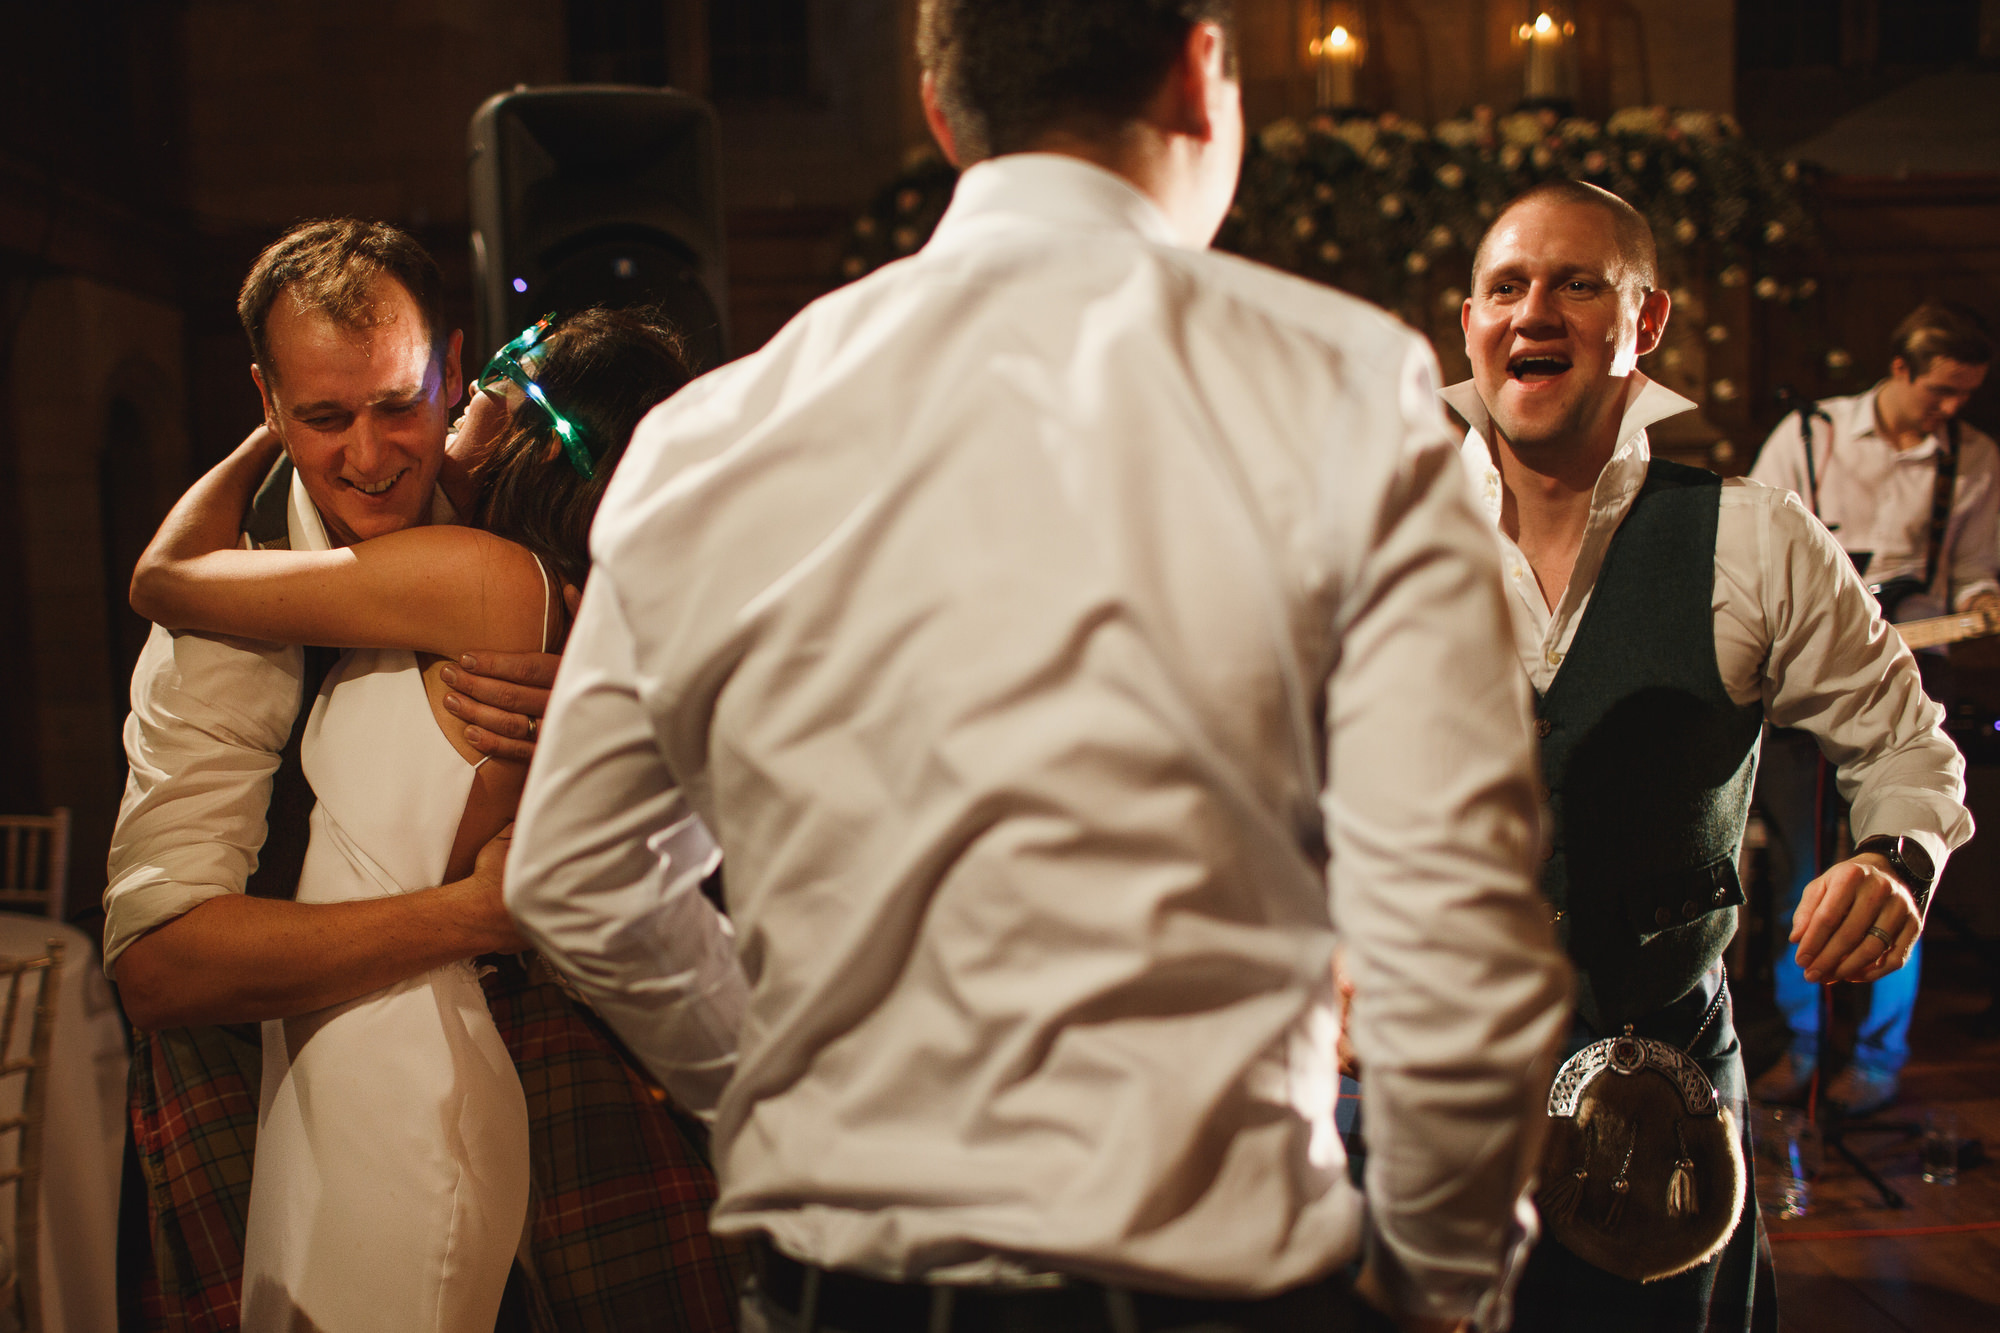 Inverness wedding photography - arj photography